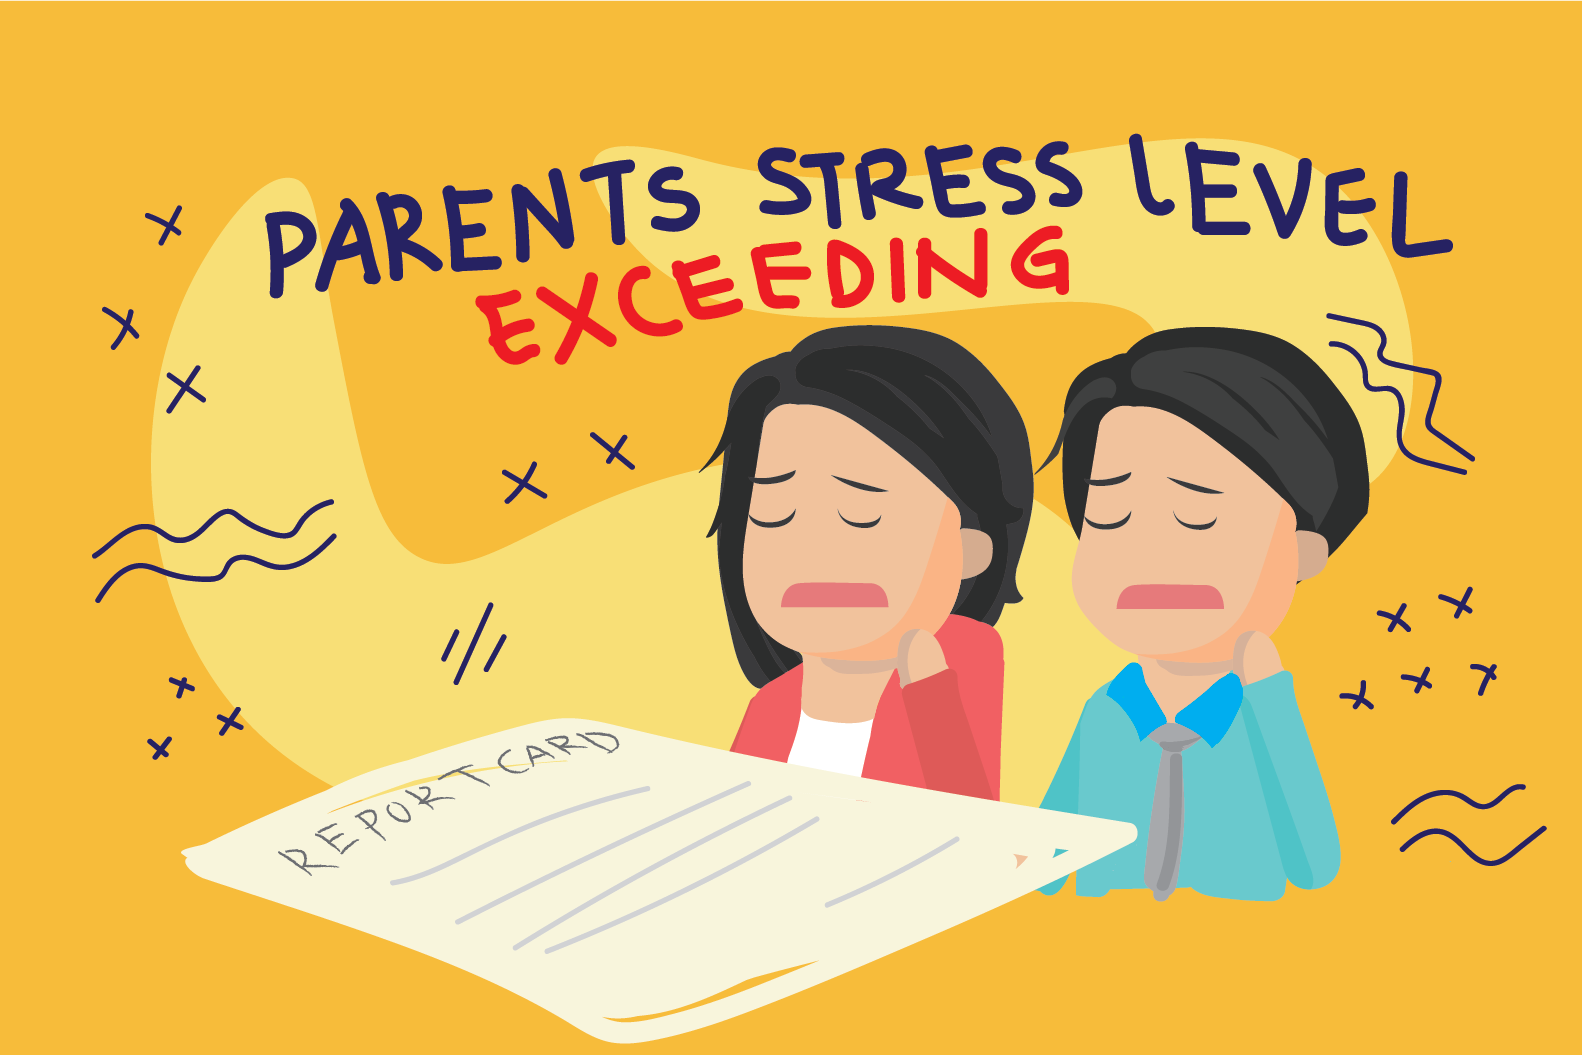 Parents Stress Level Exceeding Image